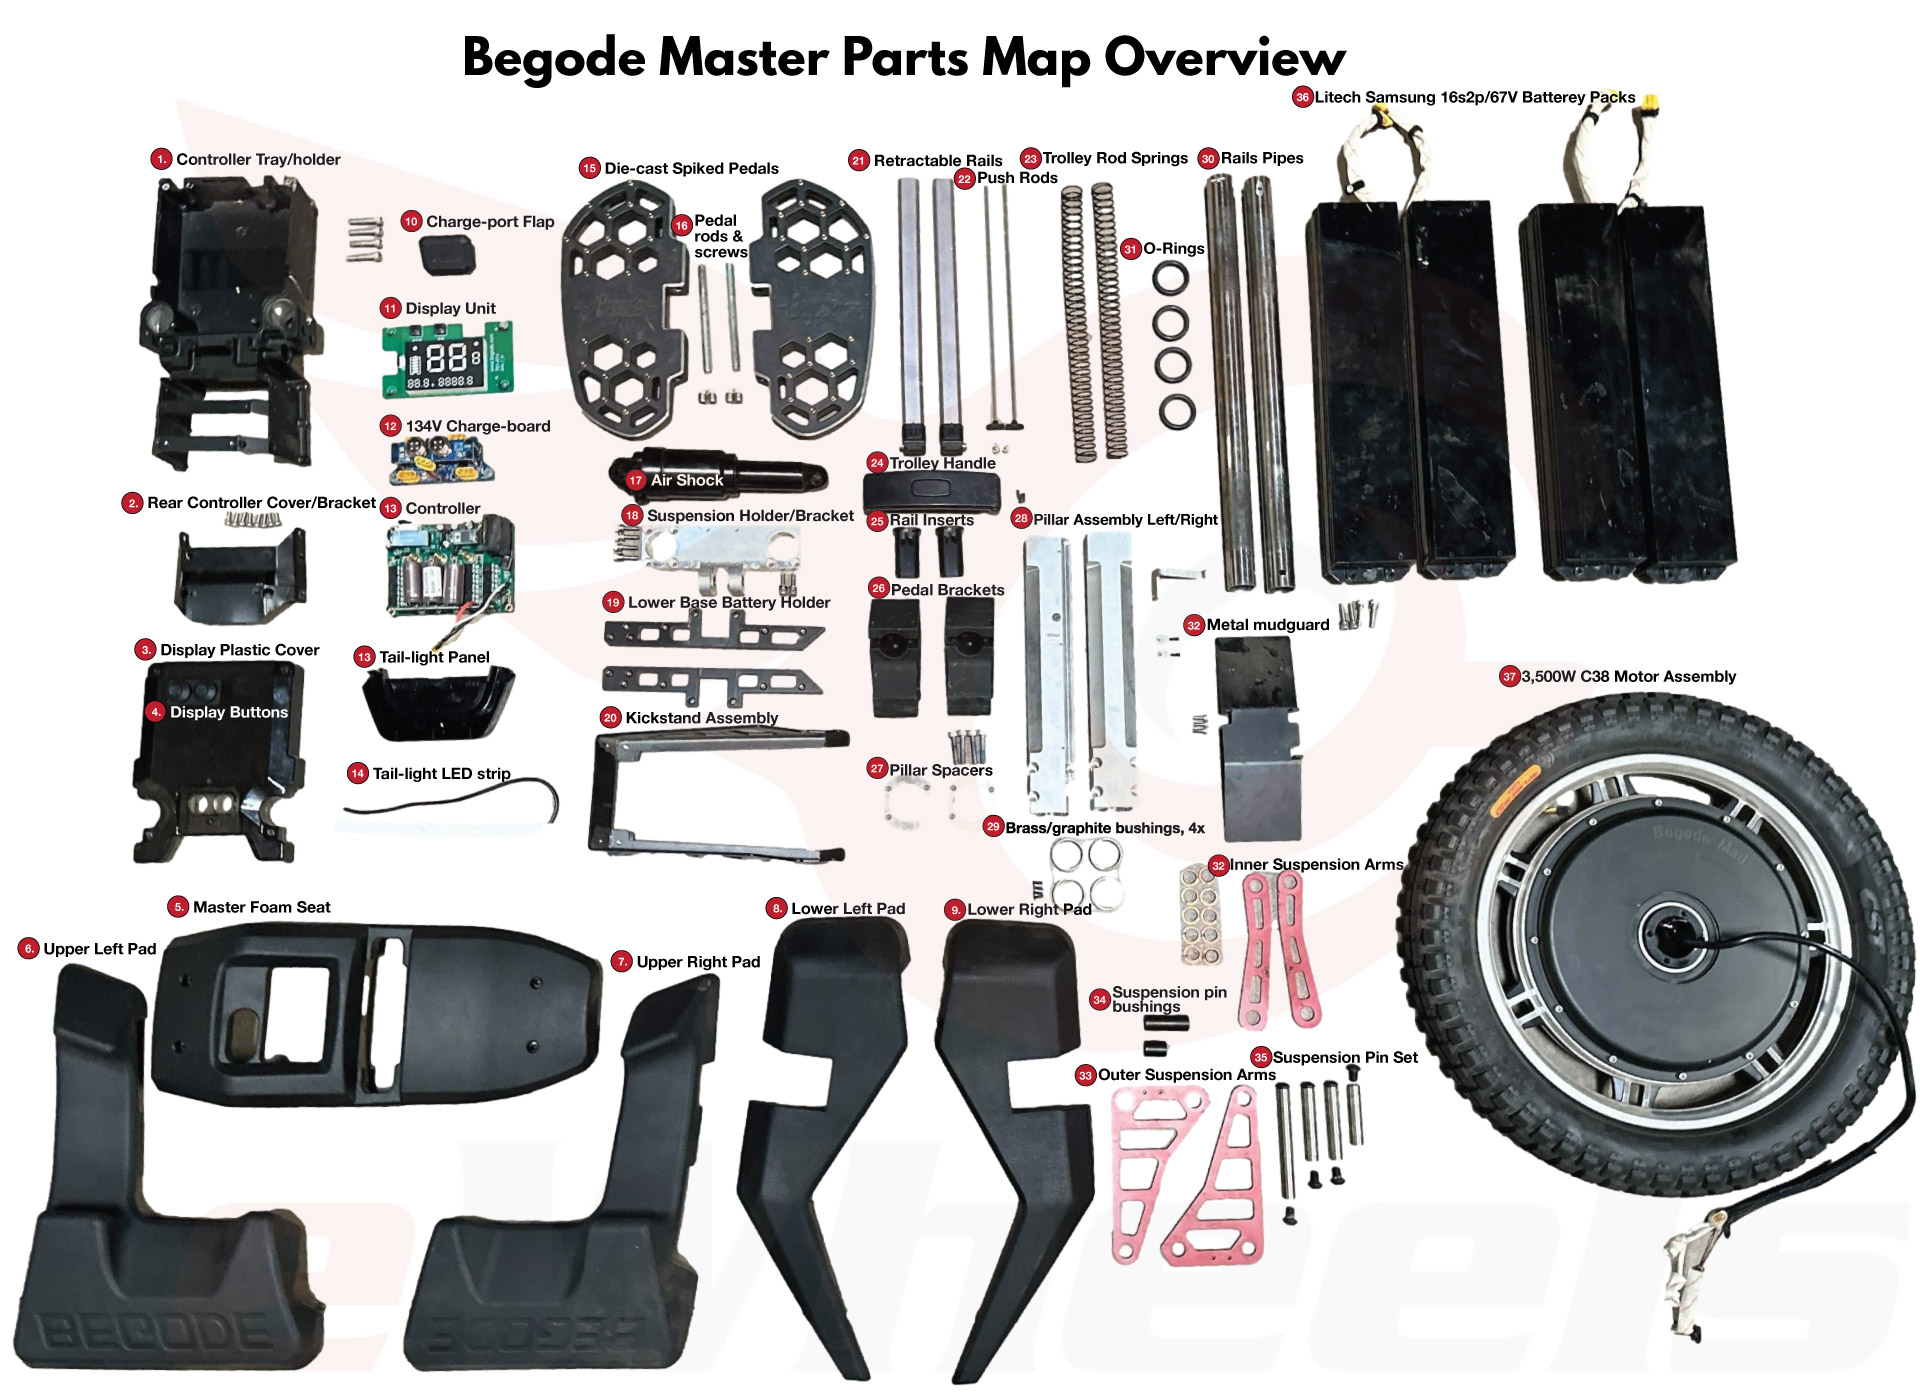 Begode Master Parts Map Overview